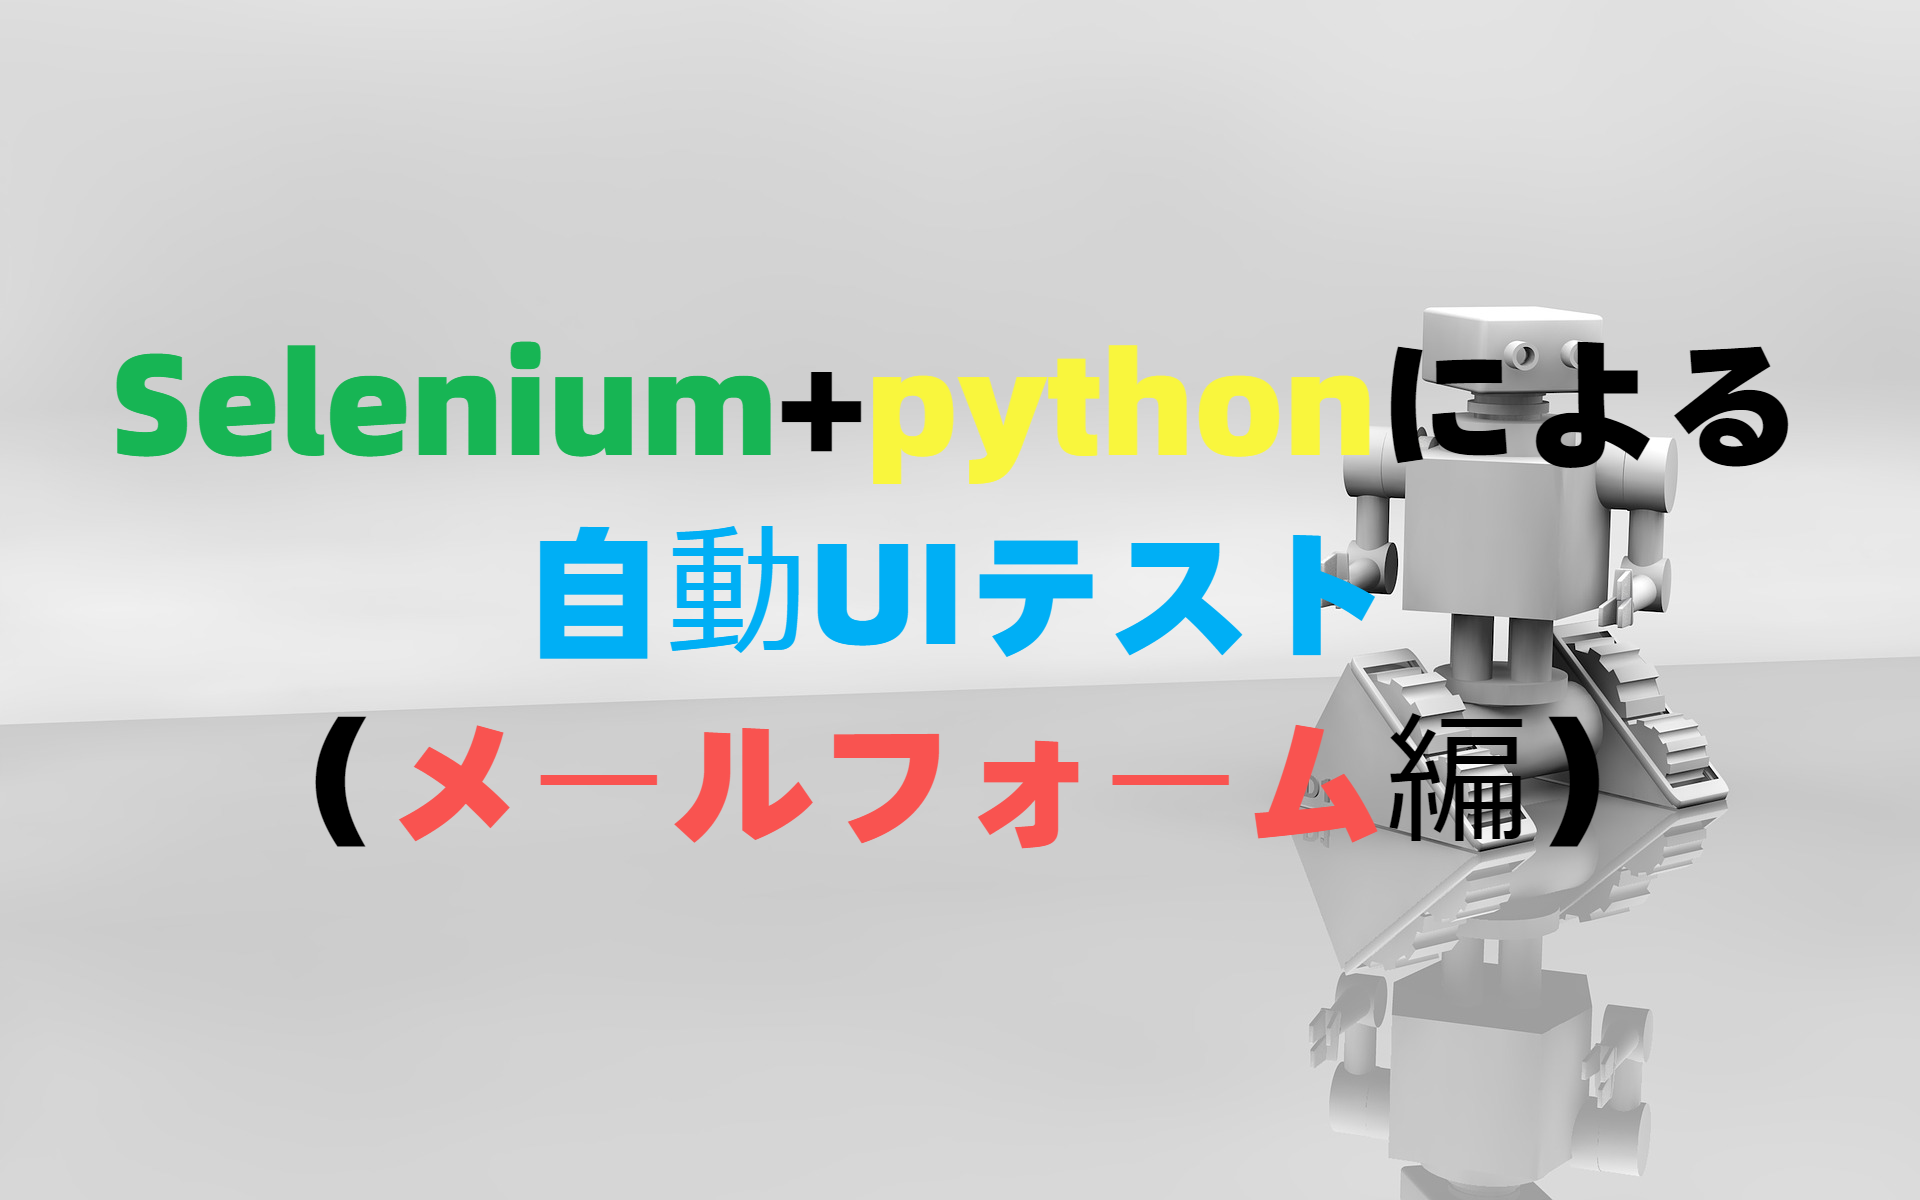 Selenium+pythonによる自動UIテスト（メールフォーム編）